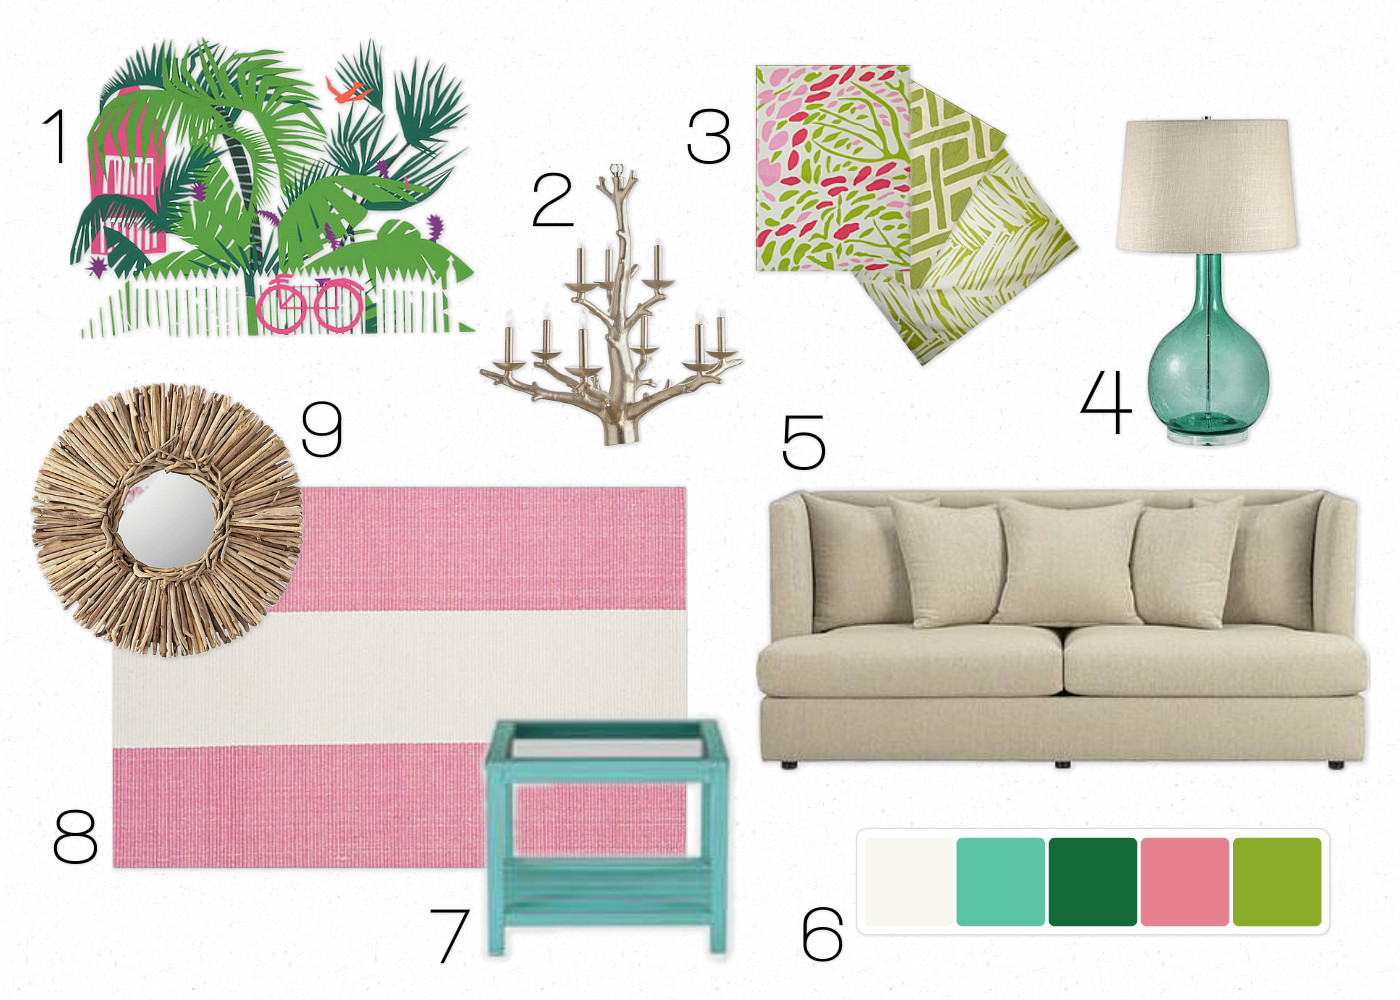  DIY  Decor  Tropical  Chic Living Room  interiors by mk